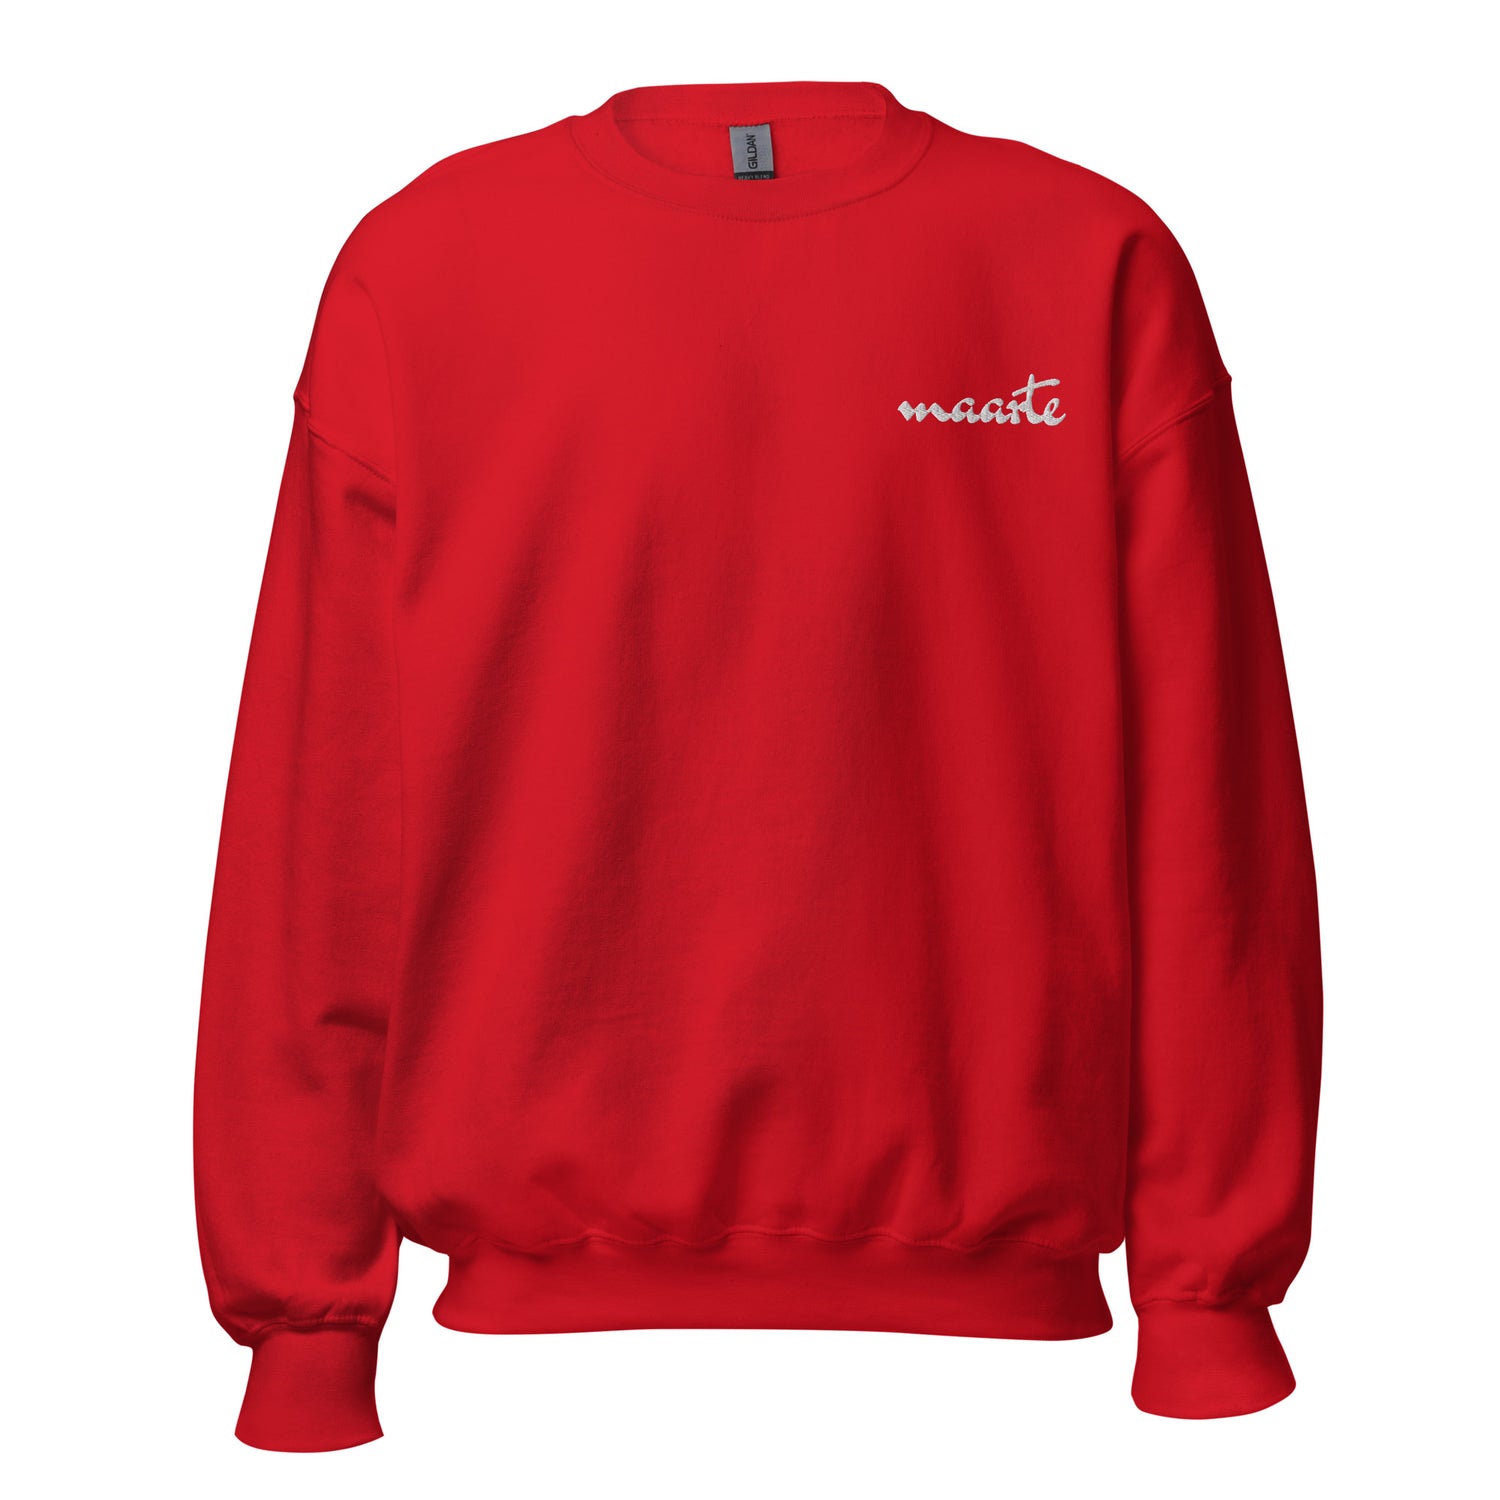 Filipino Sweatshirt Crew Neck Maarte Embroidered Statement Merch color variant Red